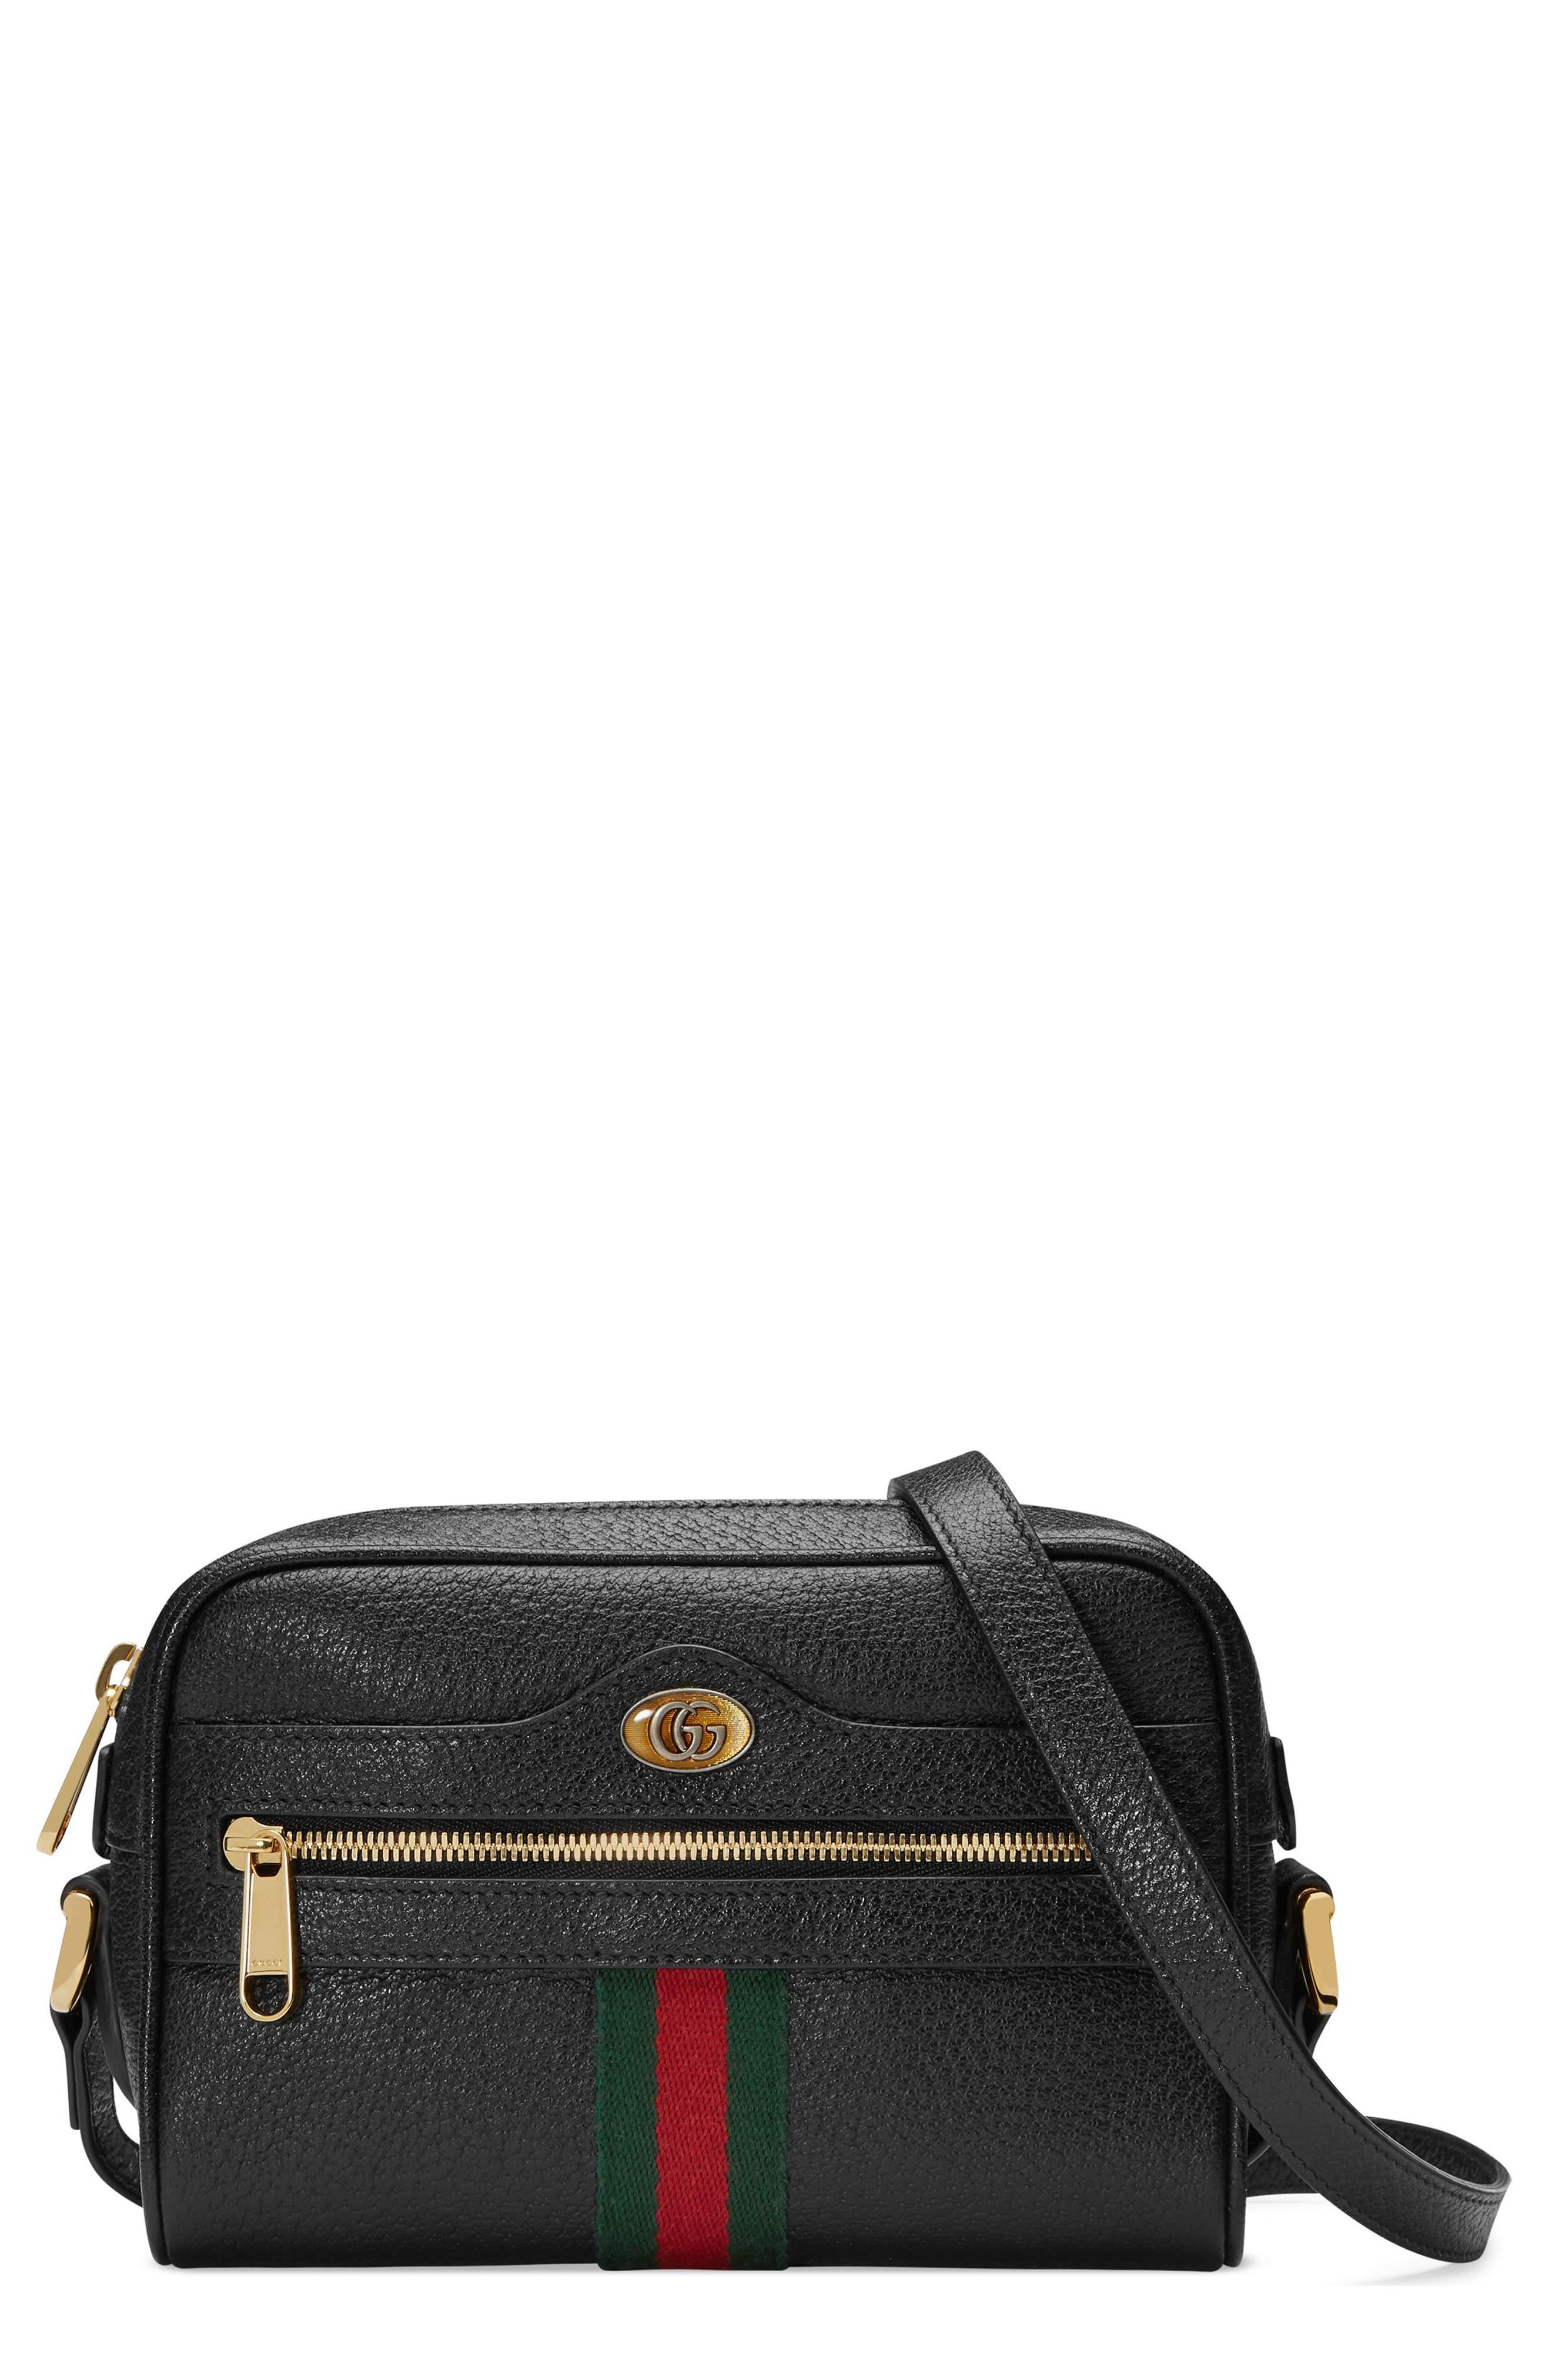 Gucci Mini Ophidia Leather Crossbody Bag in Black - Lyst